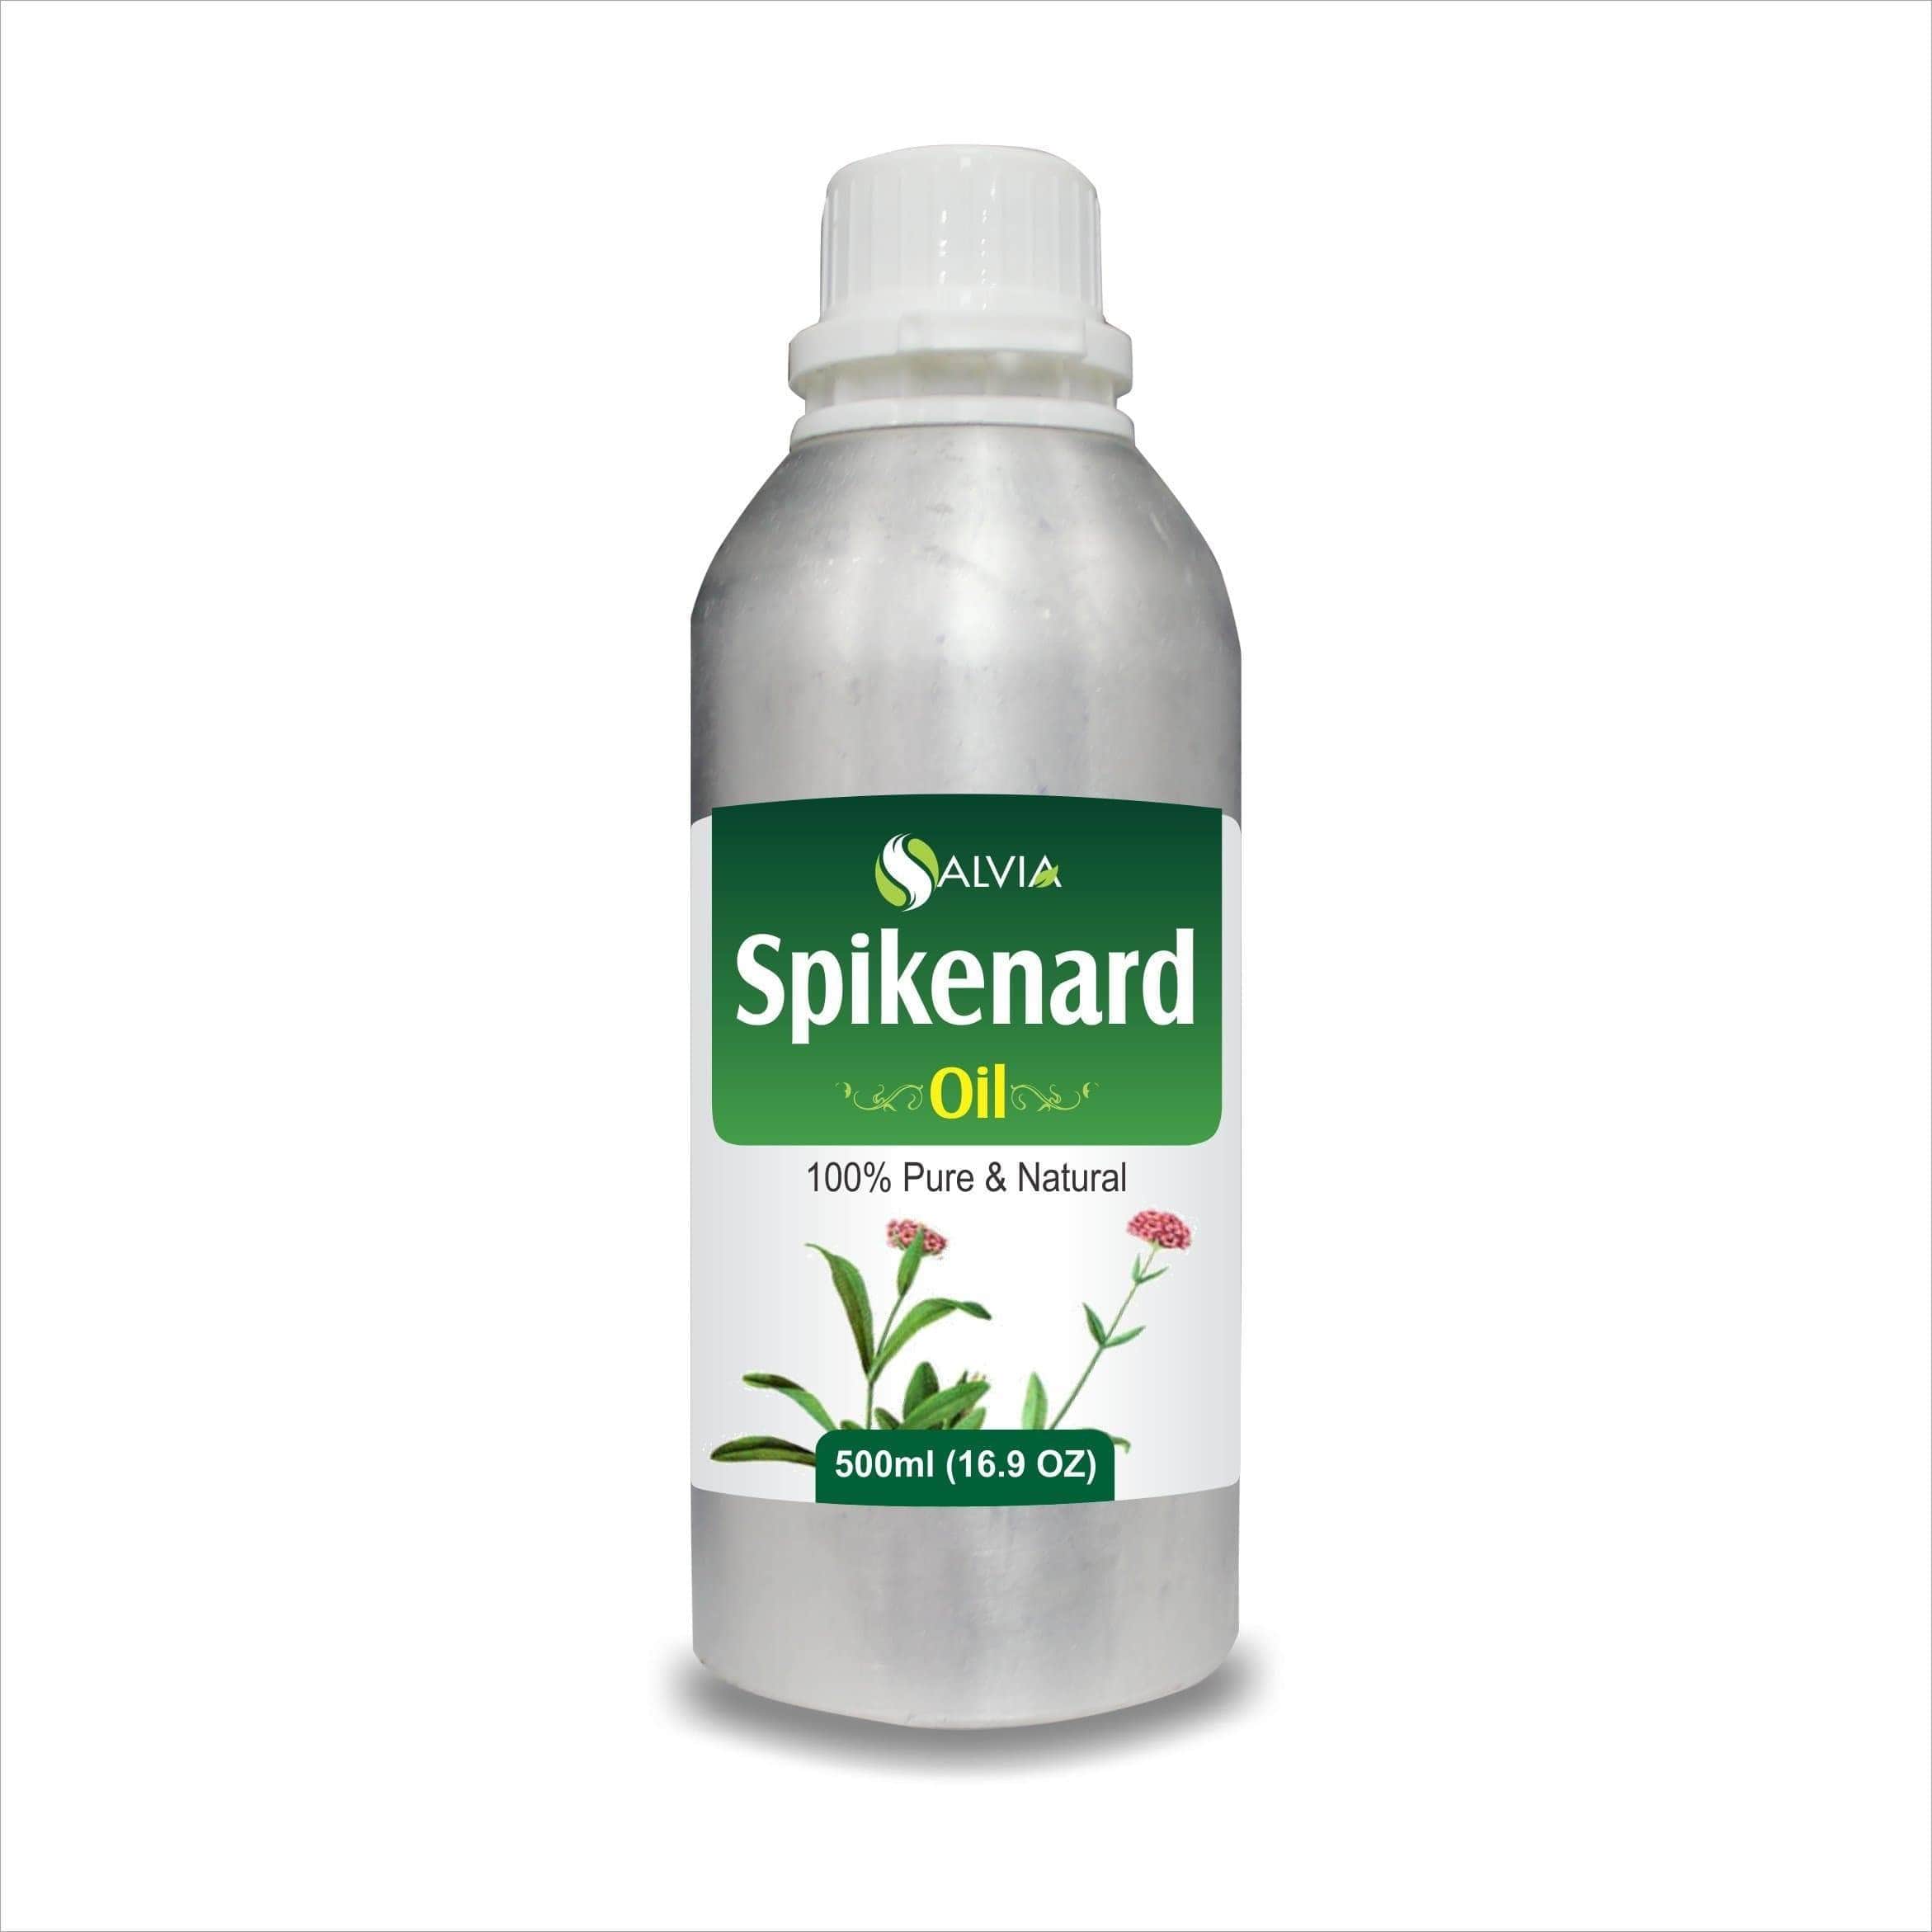 spikenard essential oil benefits for hair